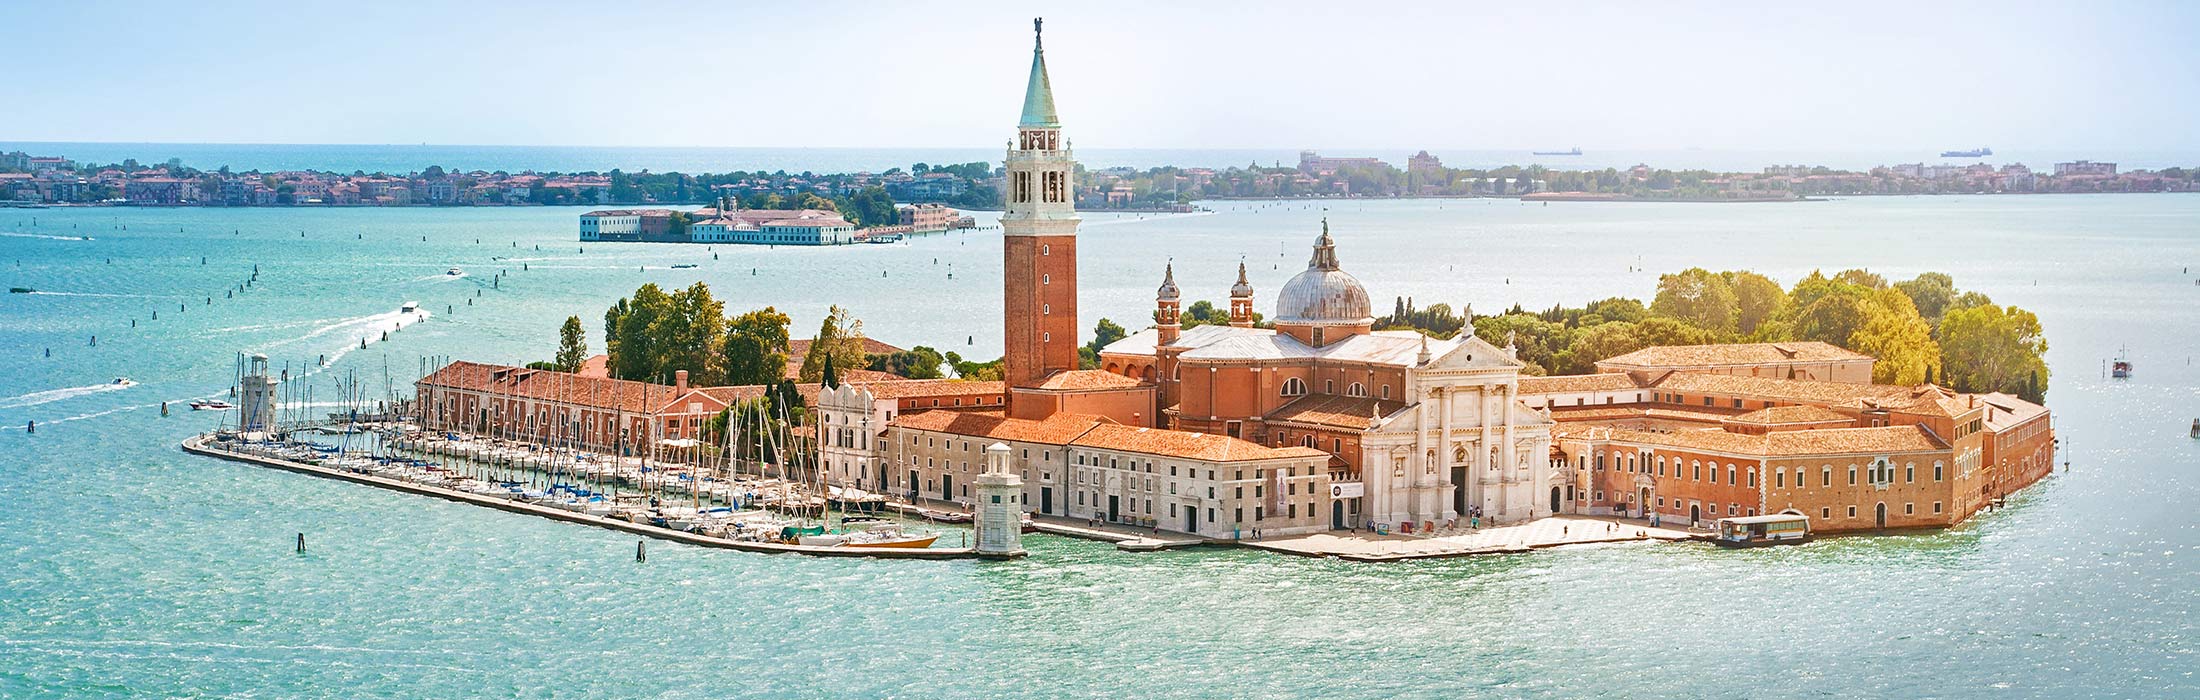 Adriatic Sea Venice Slider 3.jpg